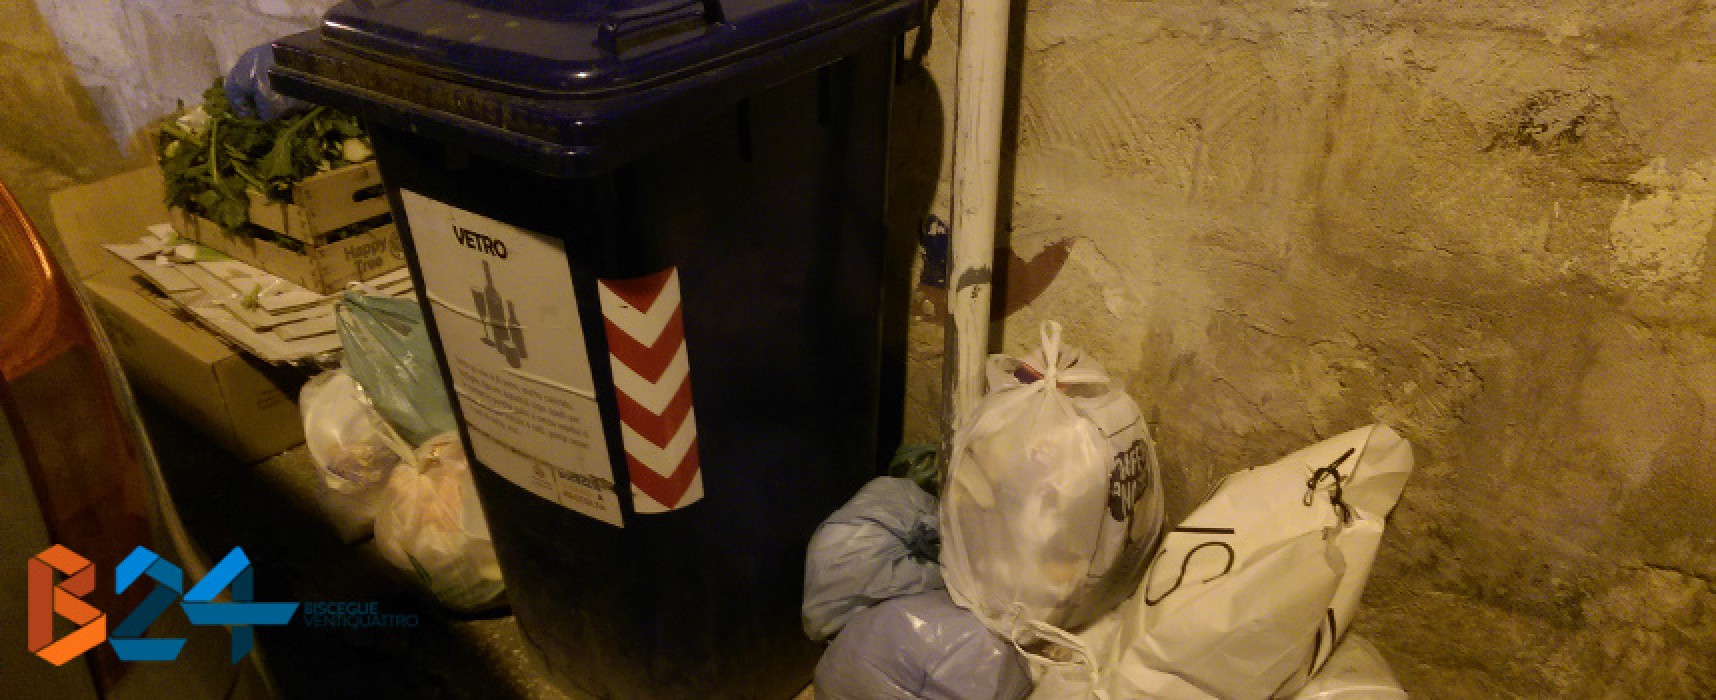 Via San Lorenzo, i cassonetti vengono spostati ma i rifiuti rimangono sul marciapiede